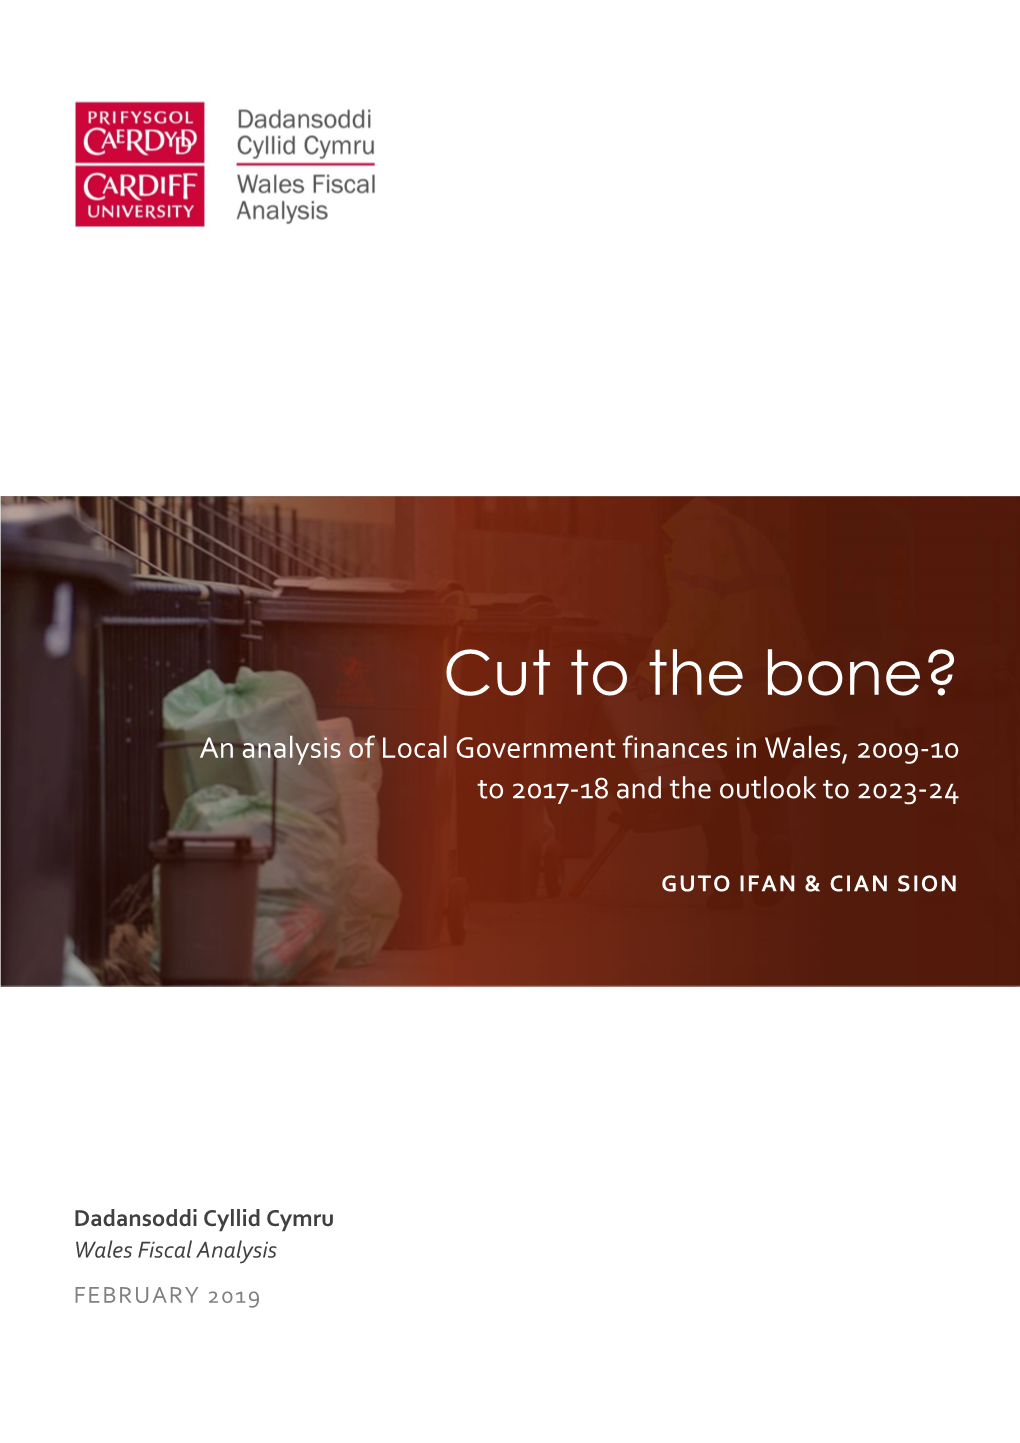 Cut to the Bone?